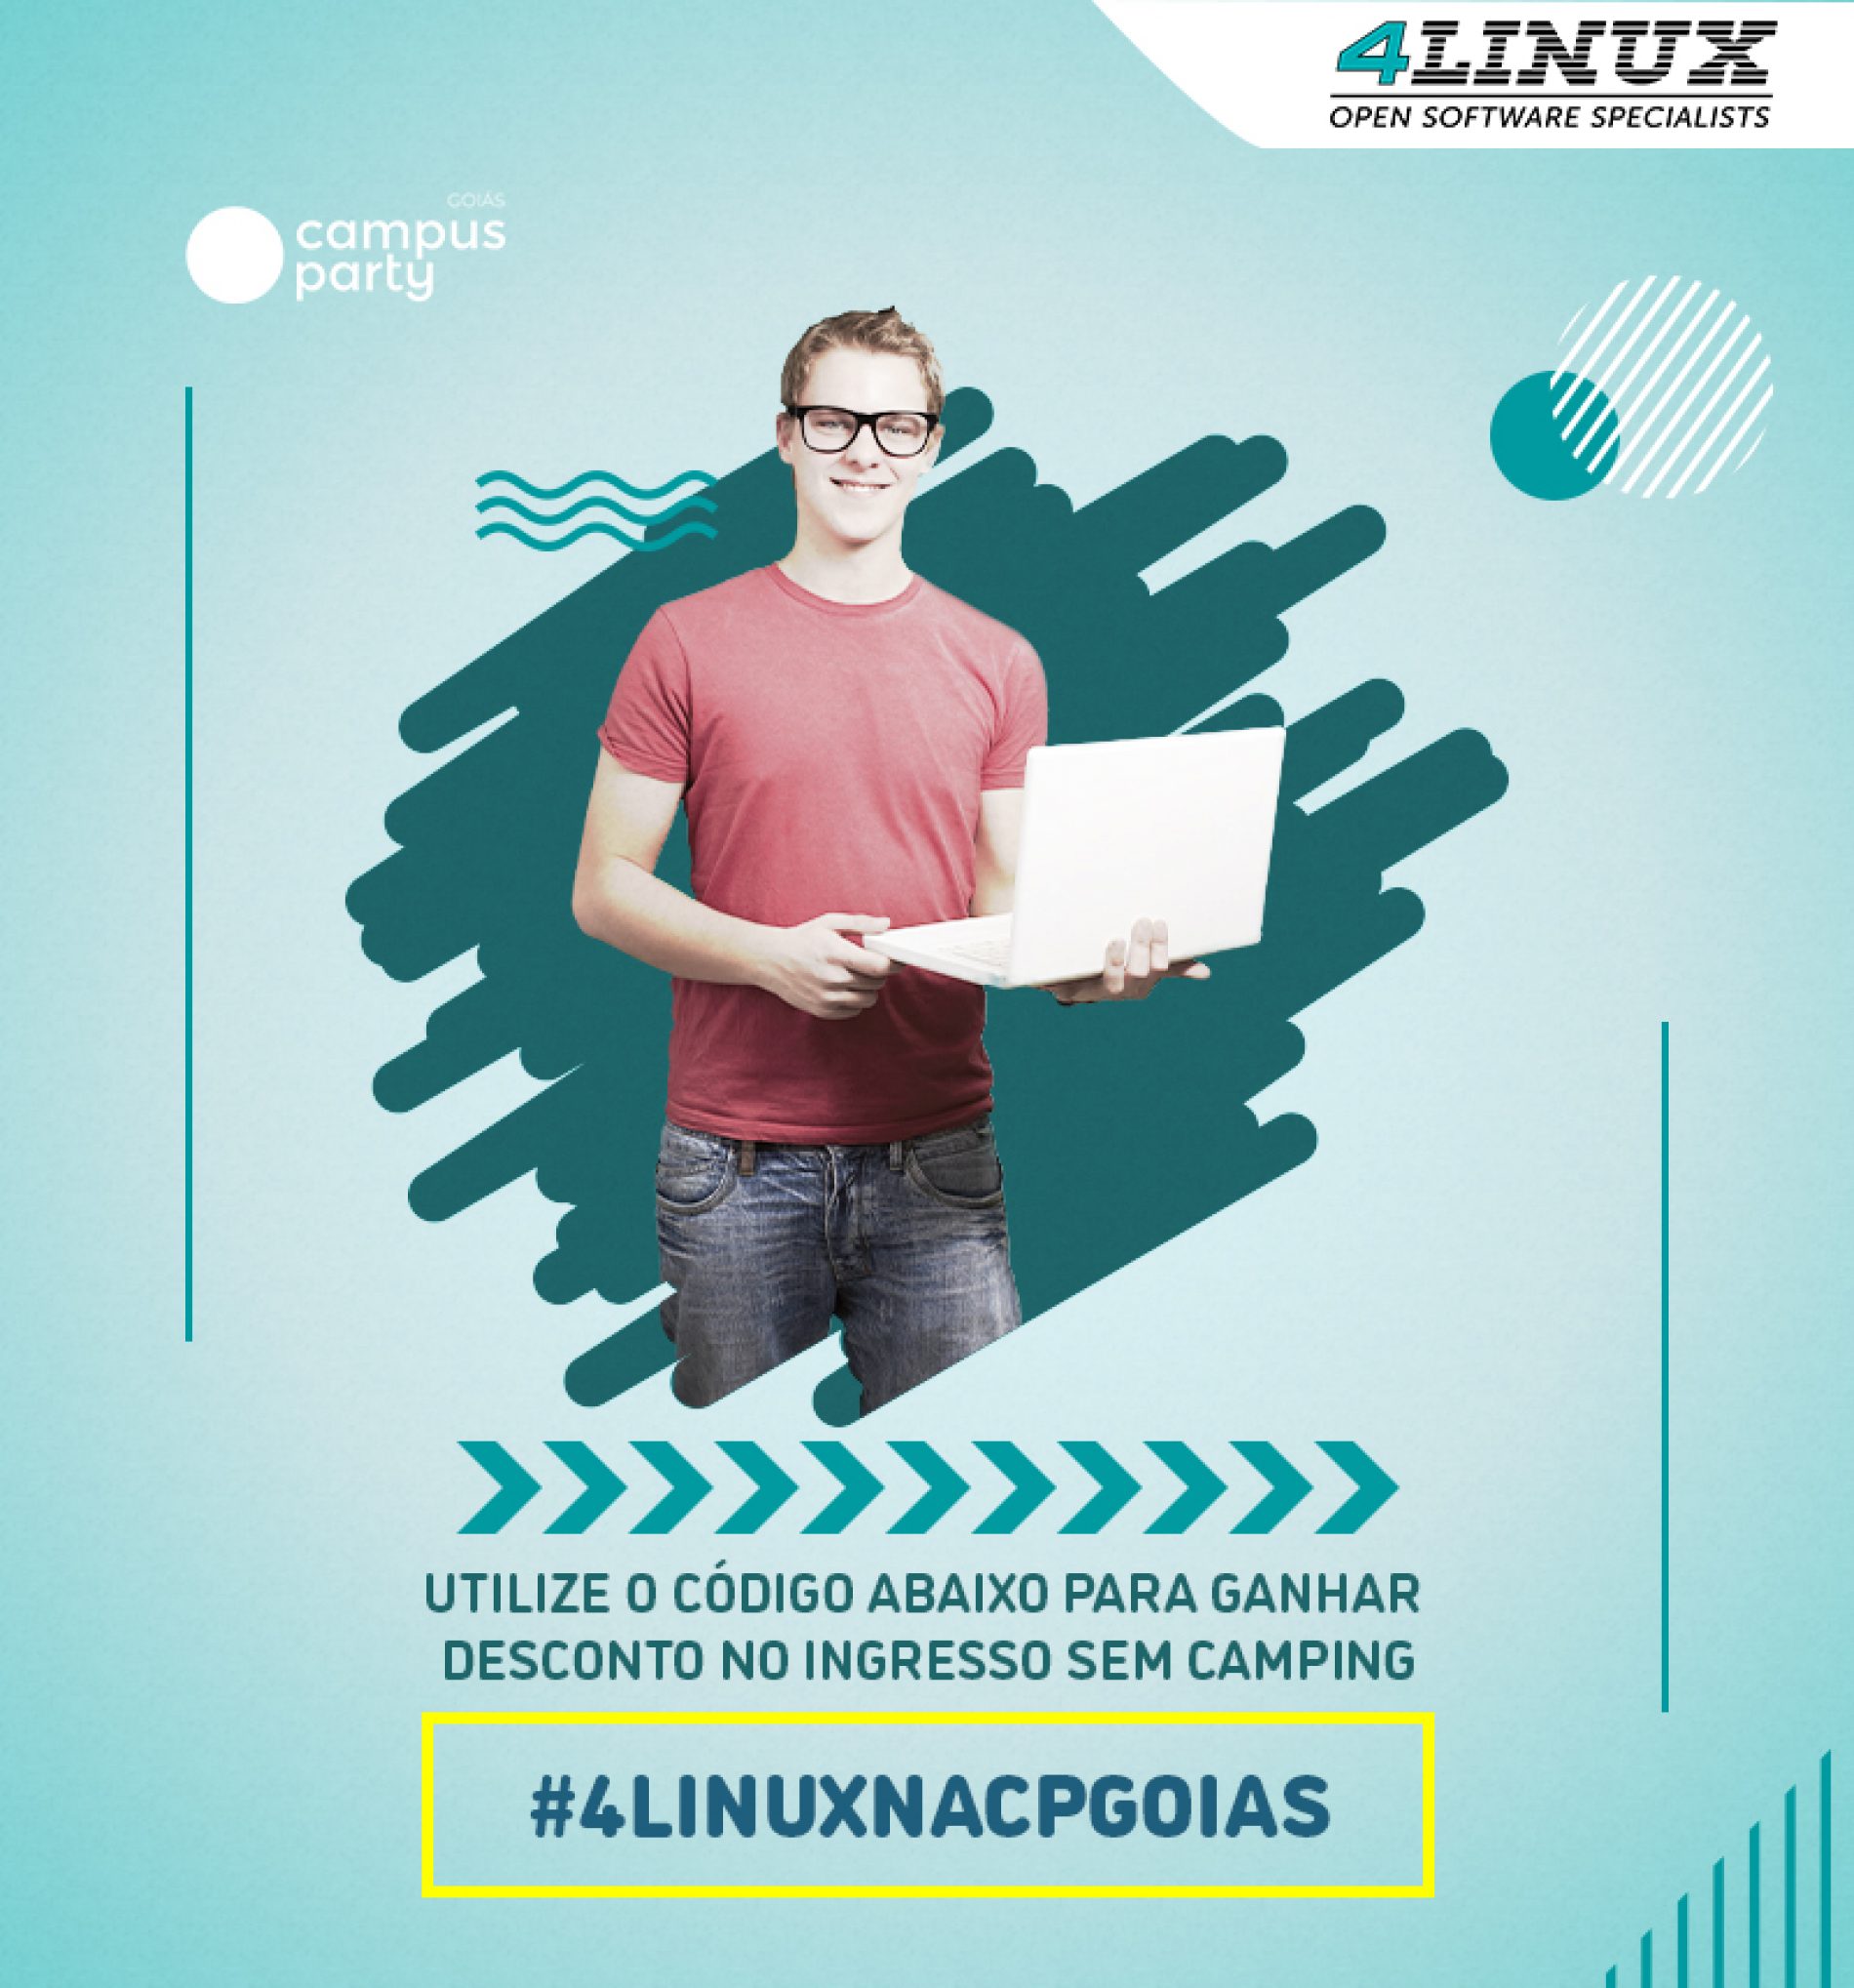 Campus Party Goiás: 4Linux oferece desconto e palestra sobre Engenharia de Dados